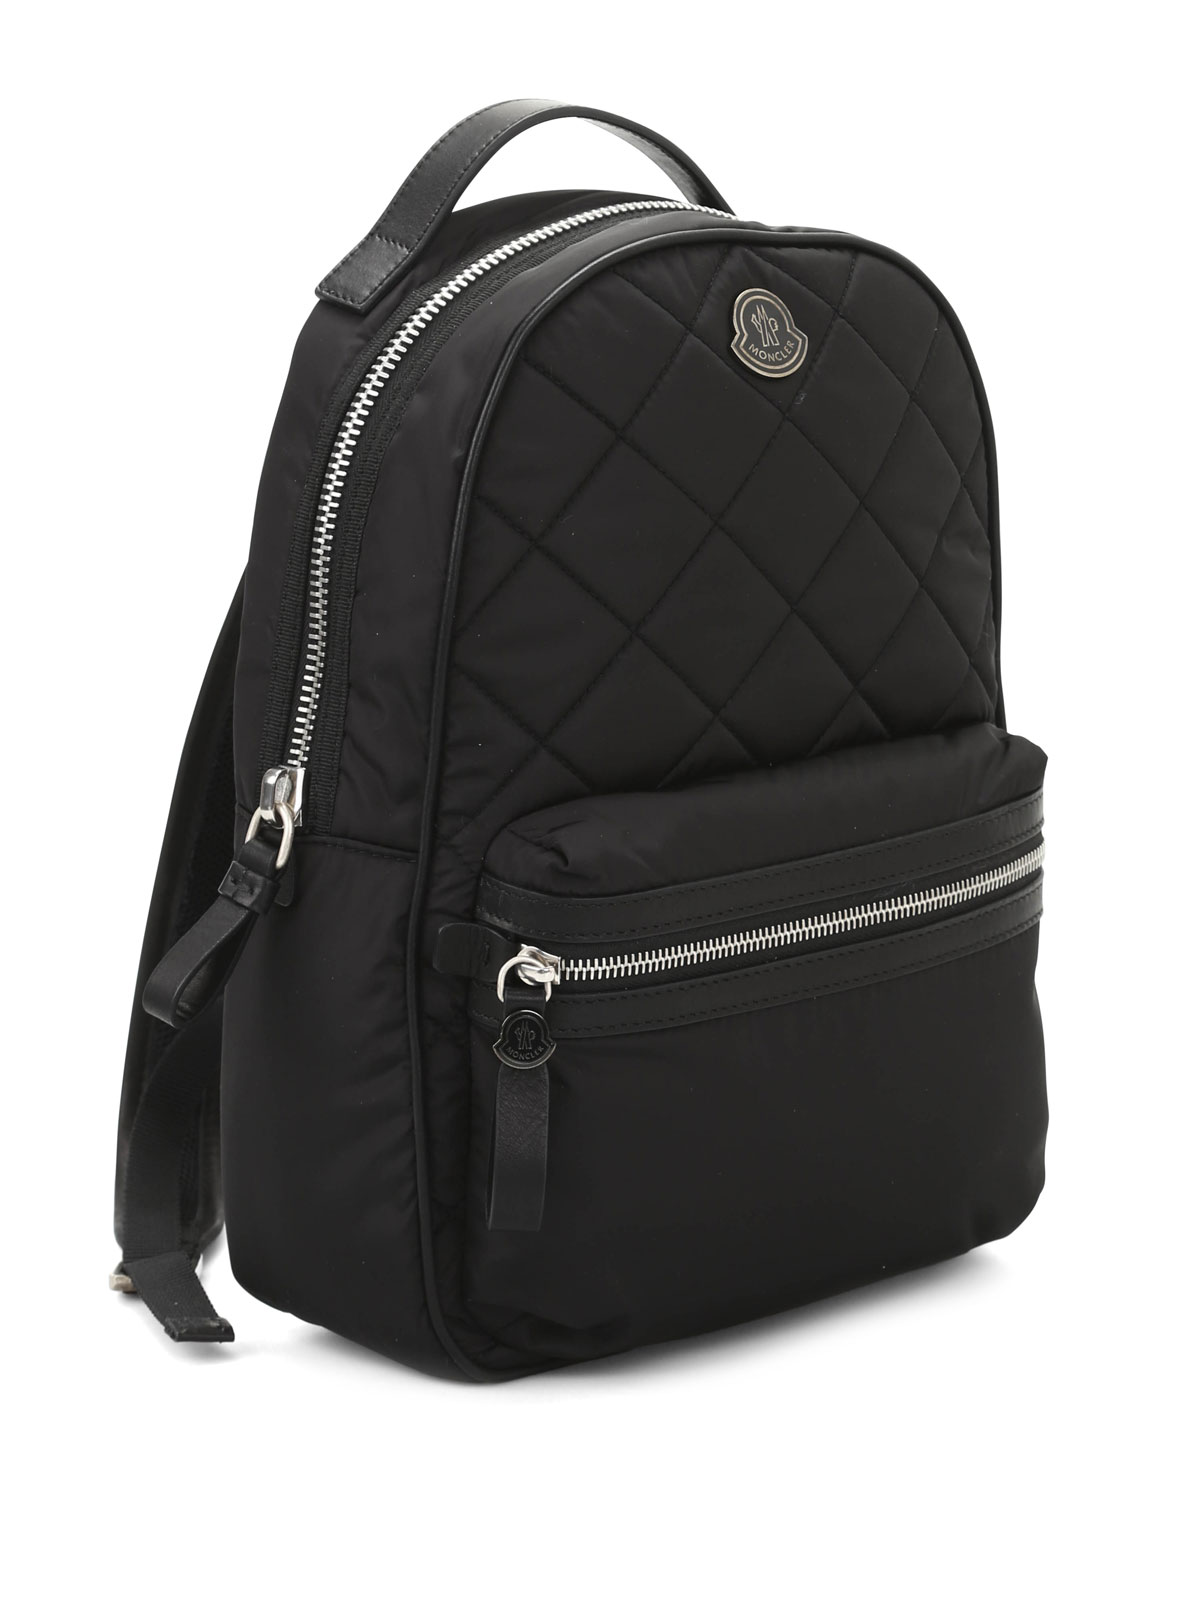 Moncler Backpack on Sale, 57% OFF | campingcanyelles.com